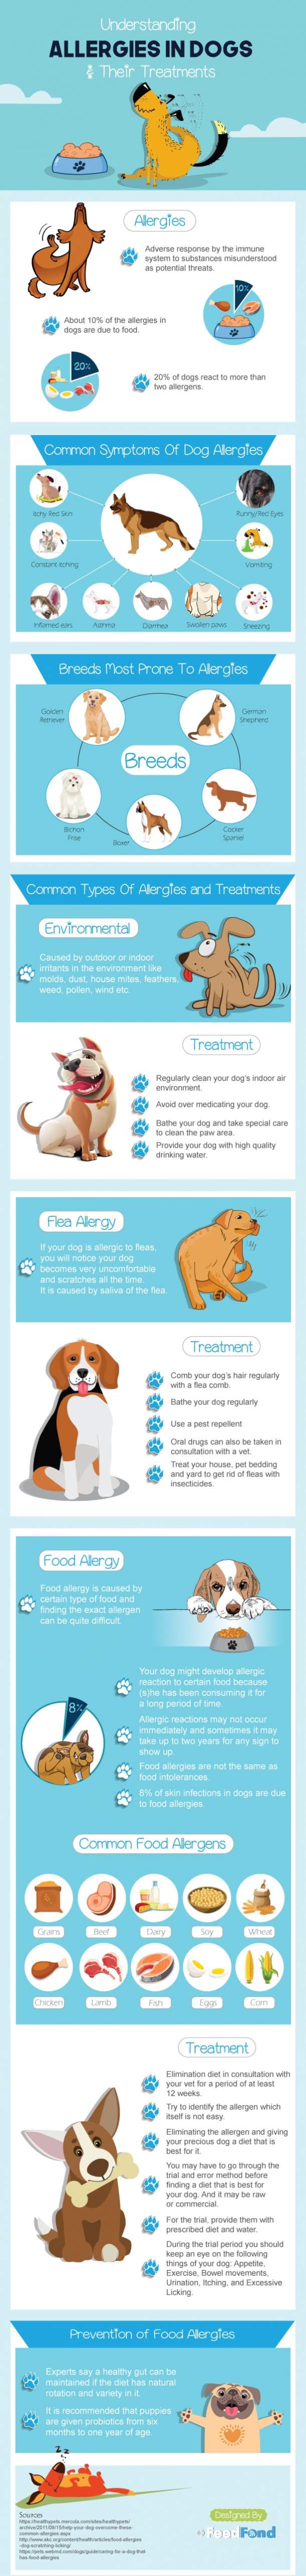 Understanding-Allergies-In-Dogs-Best-Dog-Food-For-Allergies-Guide